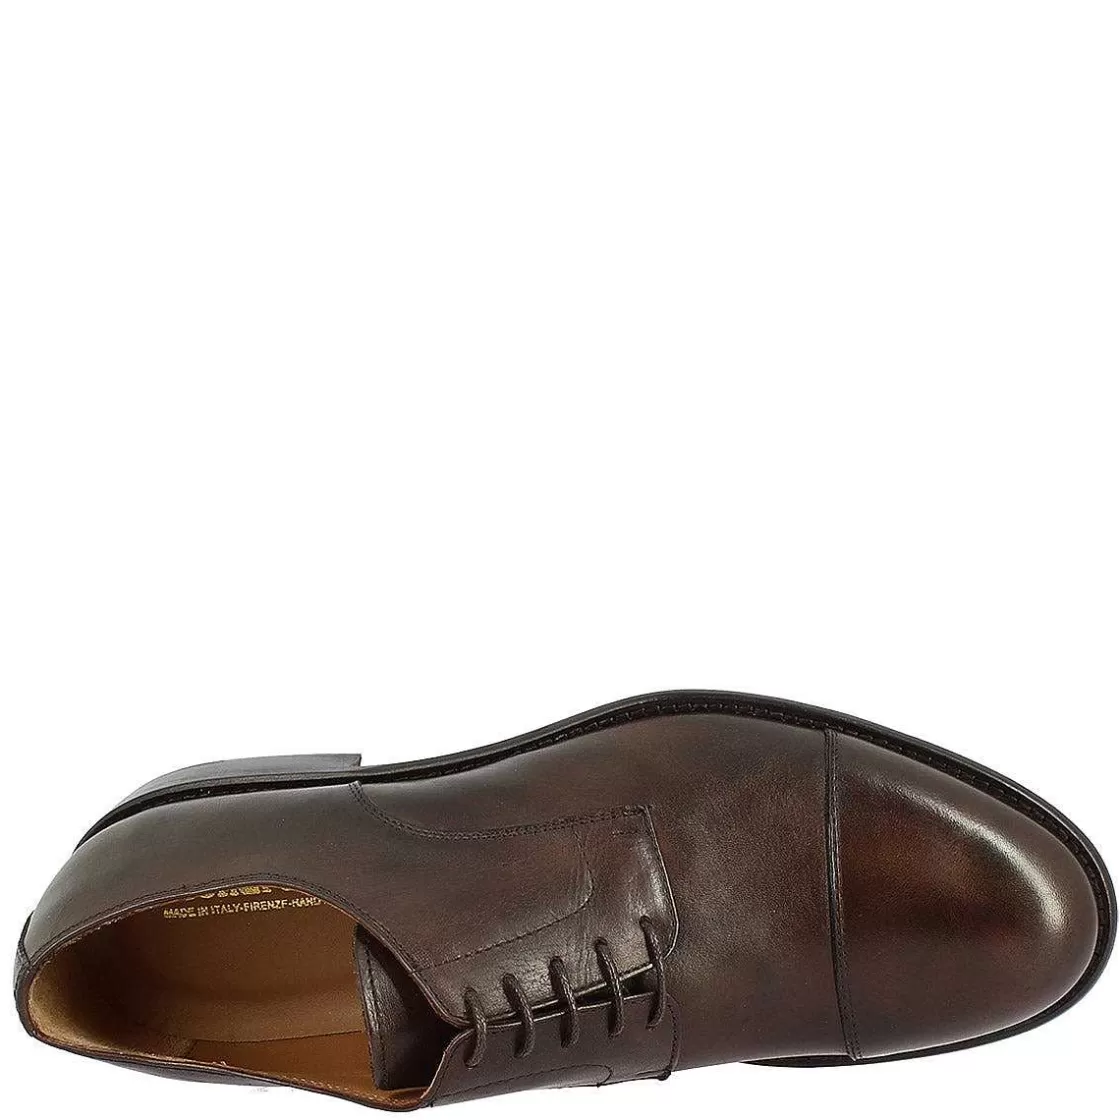 Leonardo Men'S Derby Shoes Handmade In Elegant Dark Brown Leather Hot